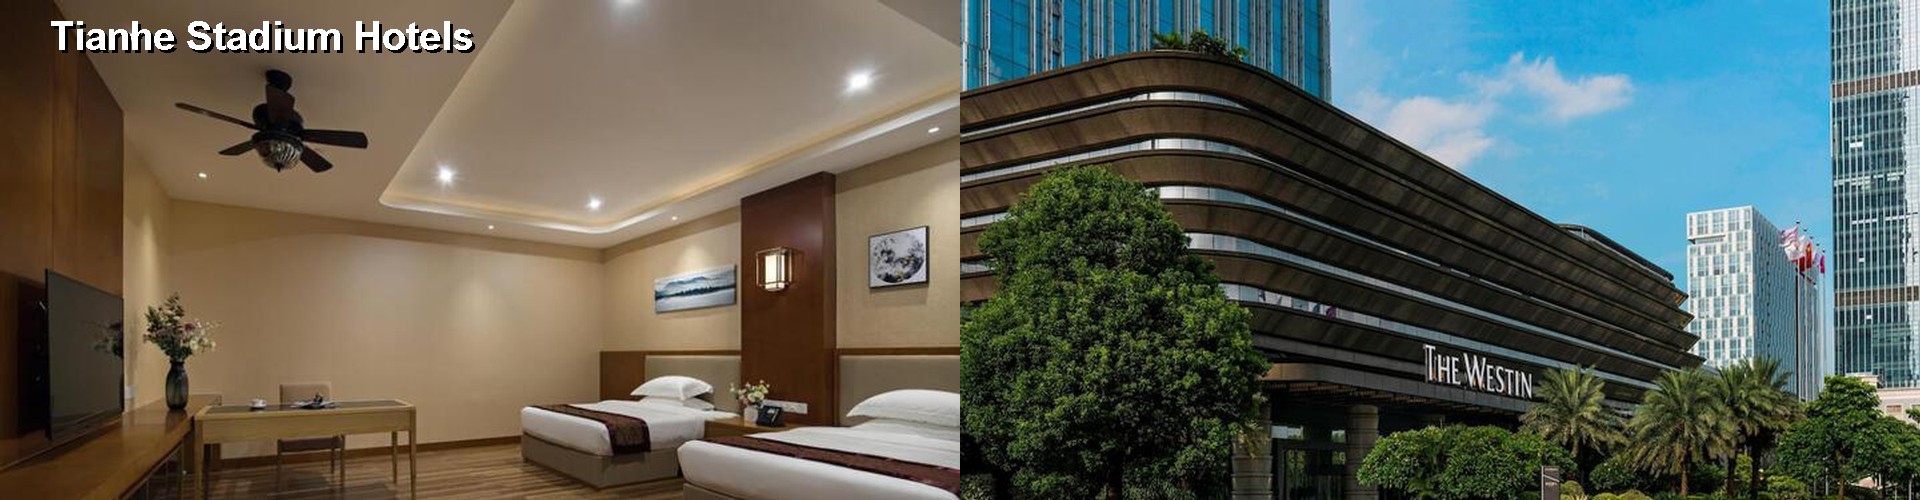 5 Best Hotels near Tianhe Stadium